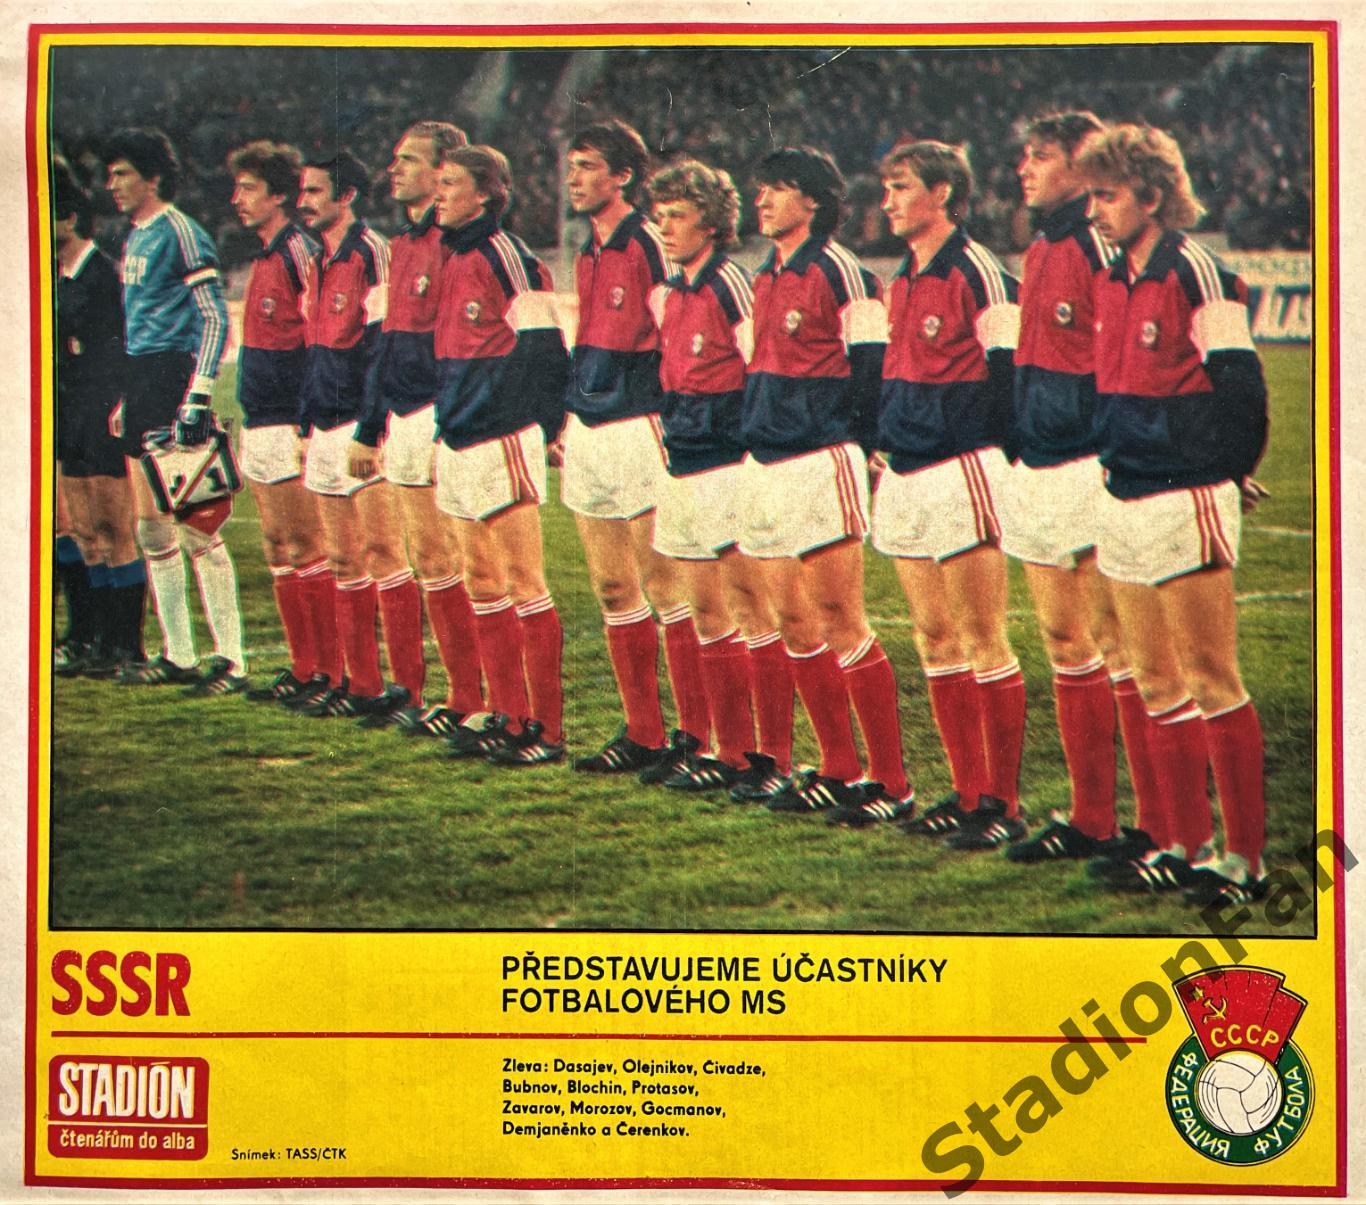 Постер из журнала Стадион (Stadion) - SSSR, 1986